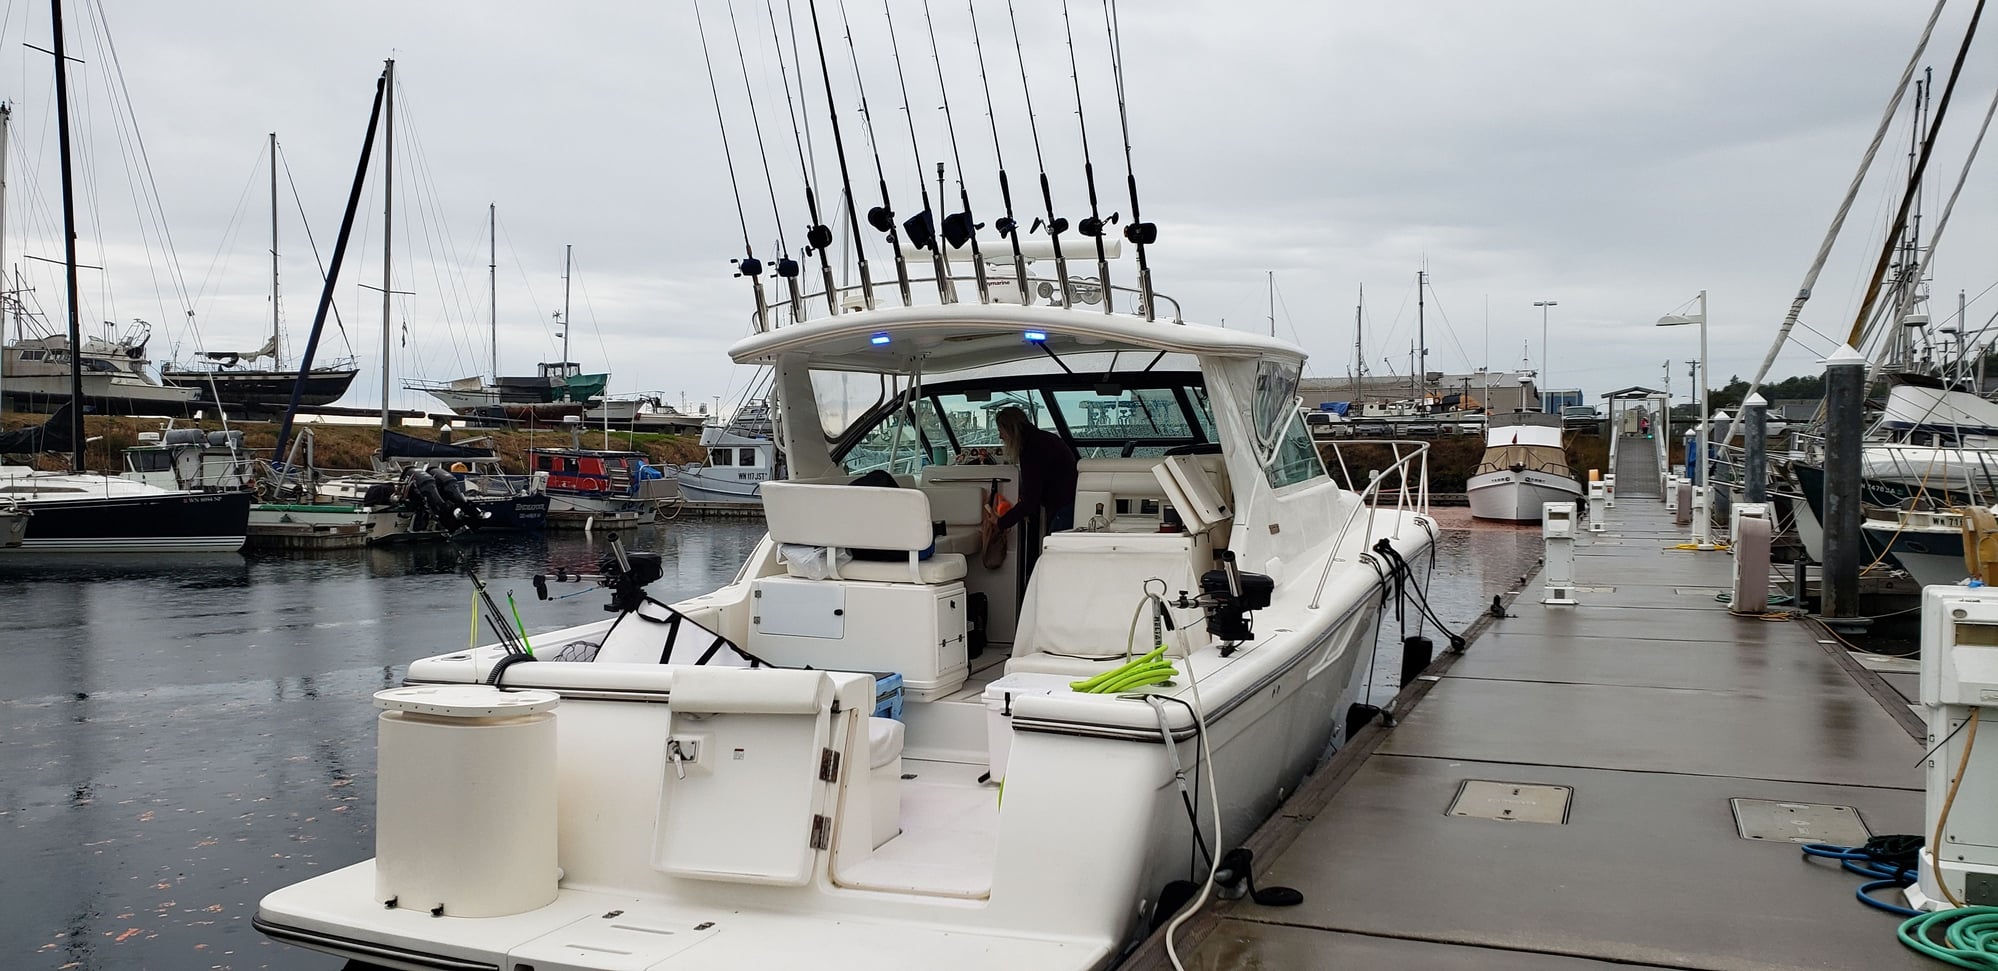 vuoksi bait holder for salmon trolling - The Hull Truth - Boating and  Fishing Forum